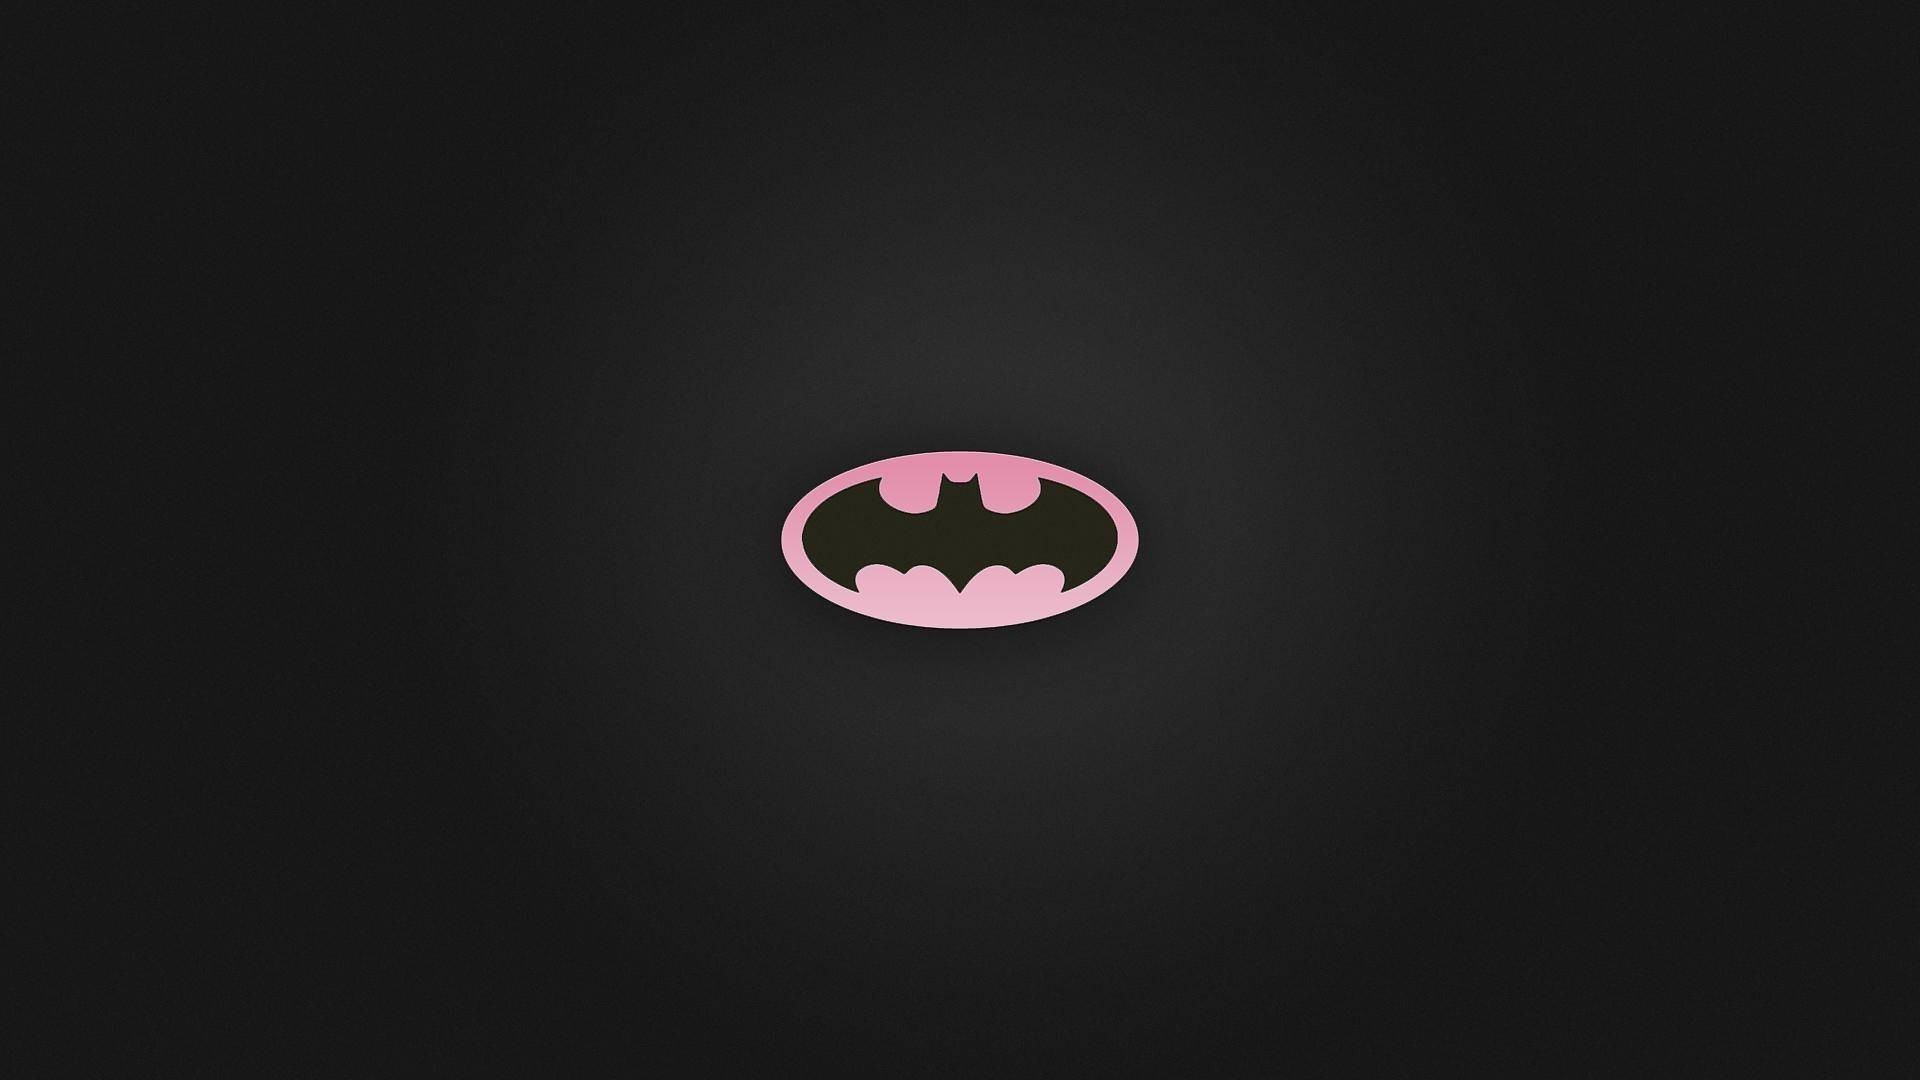 Minimalistic Batman Logo wallpapers Minimalistic Batman Logo